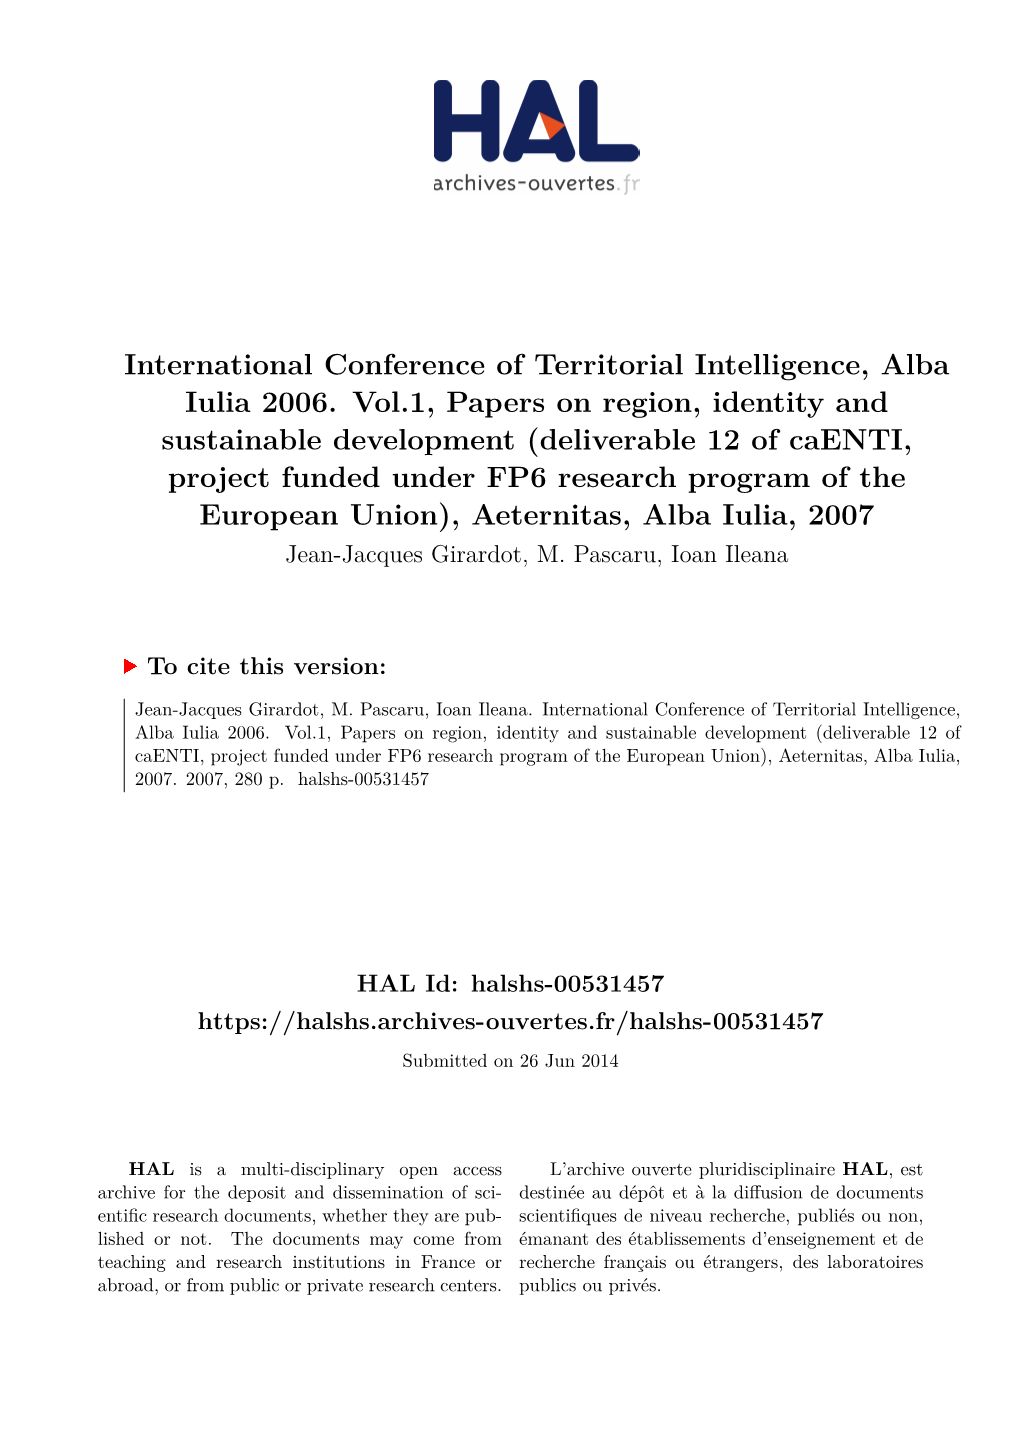 International Conference of Territorial Intelligence, Alba Iulia 2006. Vol.1